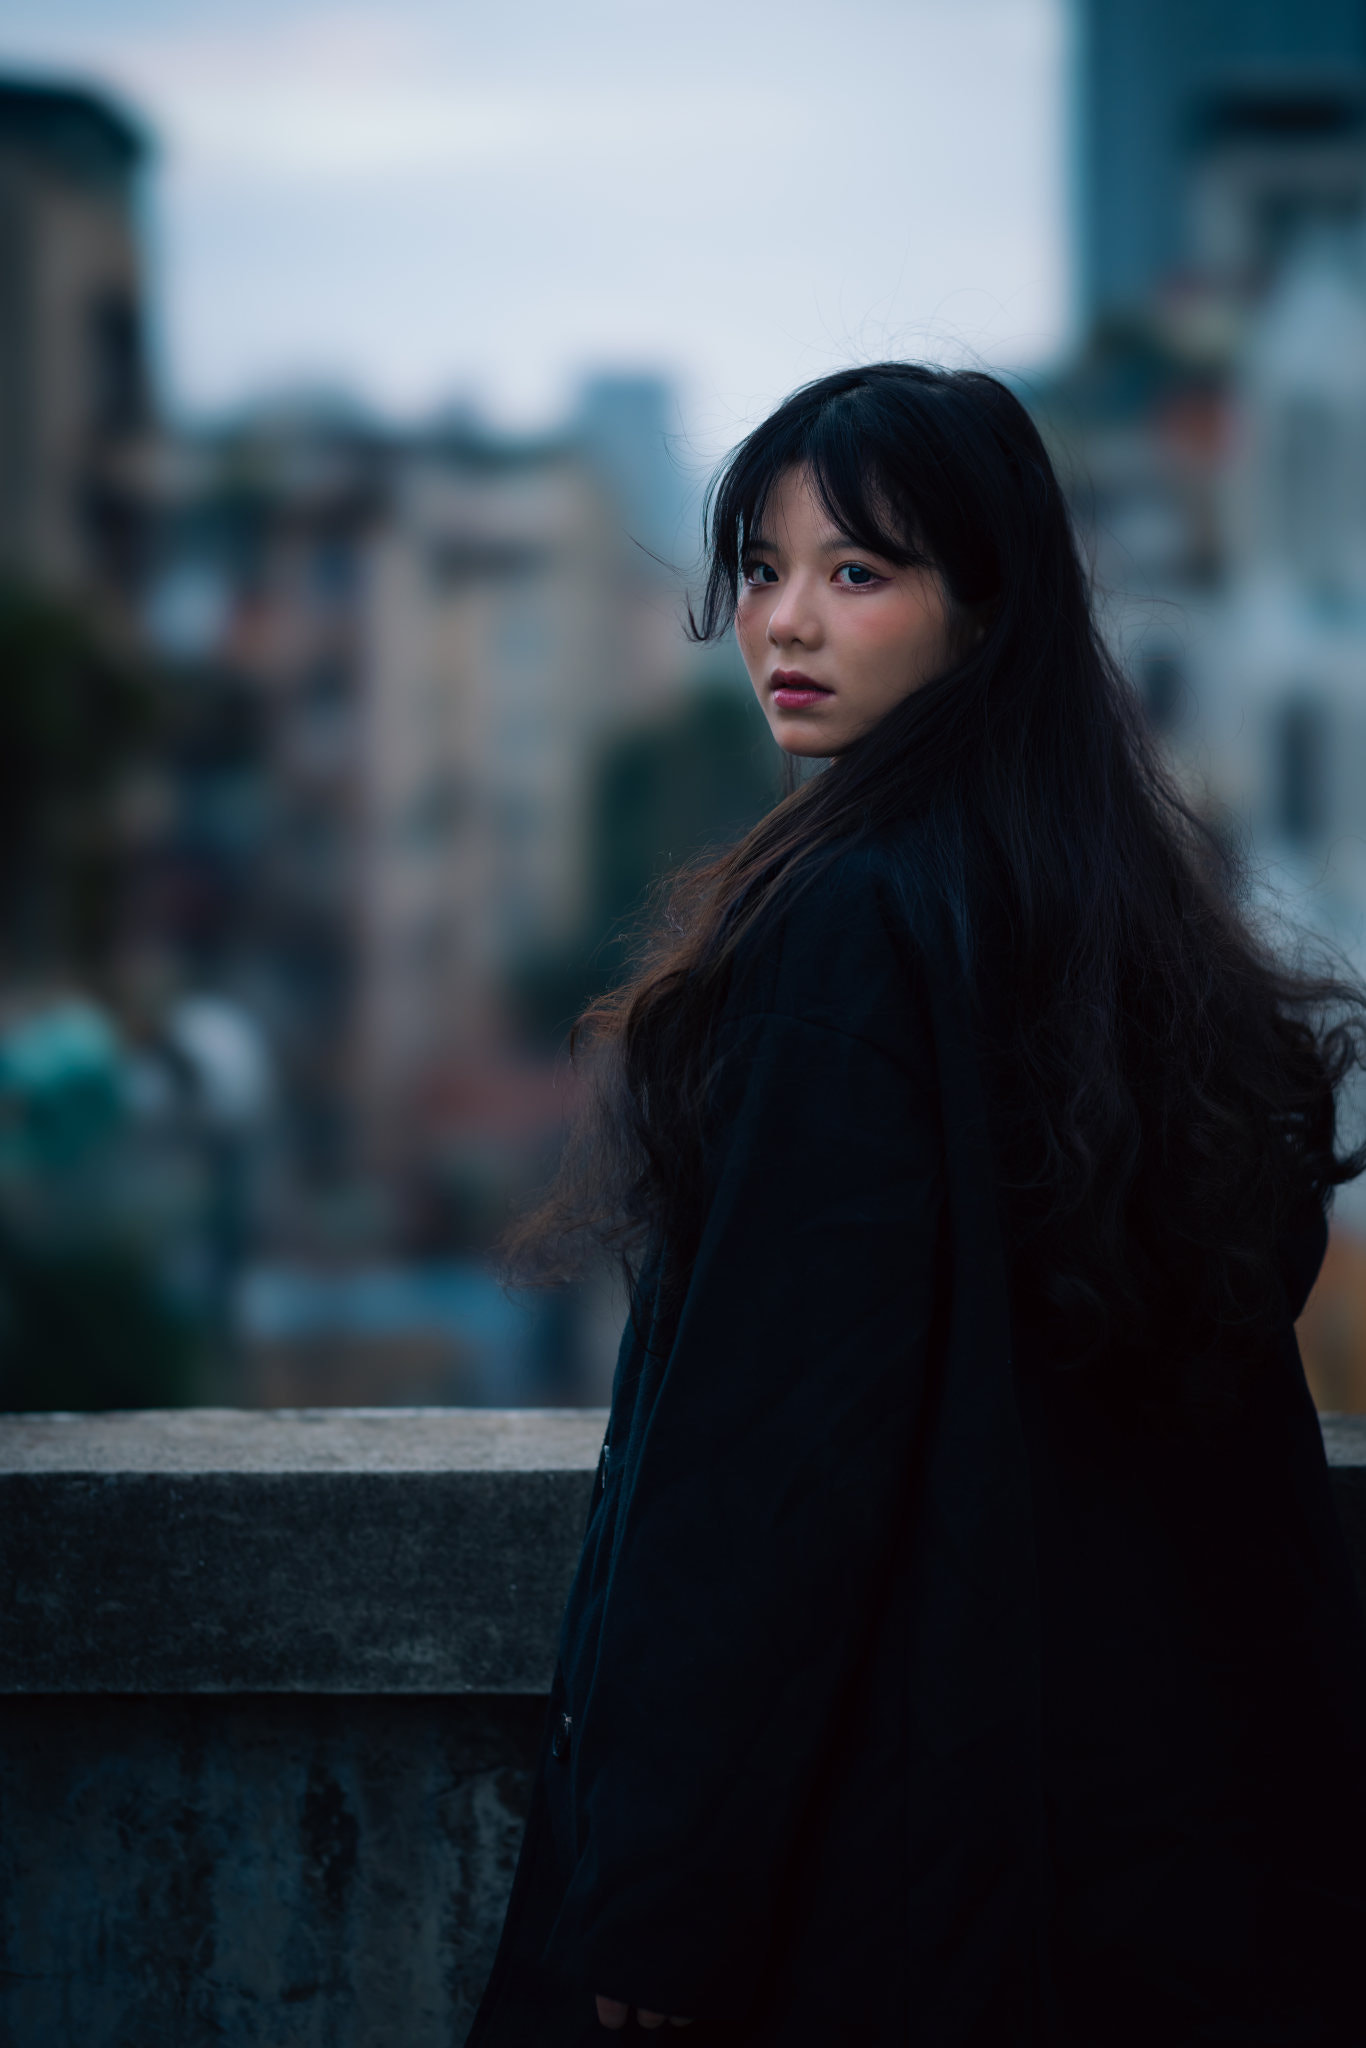 Qin Xiaoqiang Women Asian Dark Hair Looking At Viewer Blush Black Clothing Rooftops Cold 1366x2048